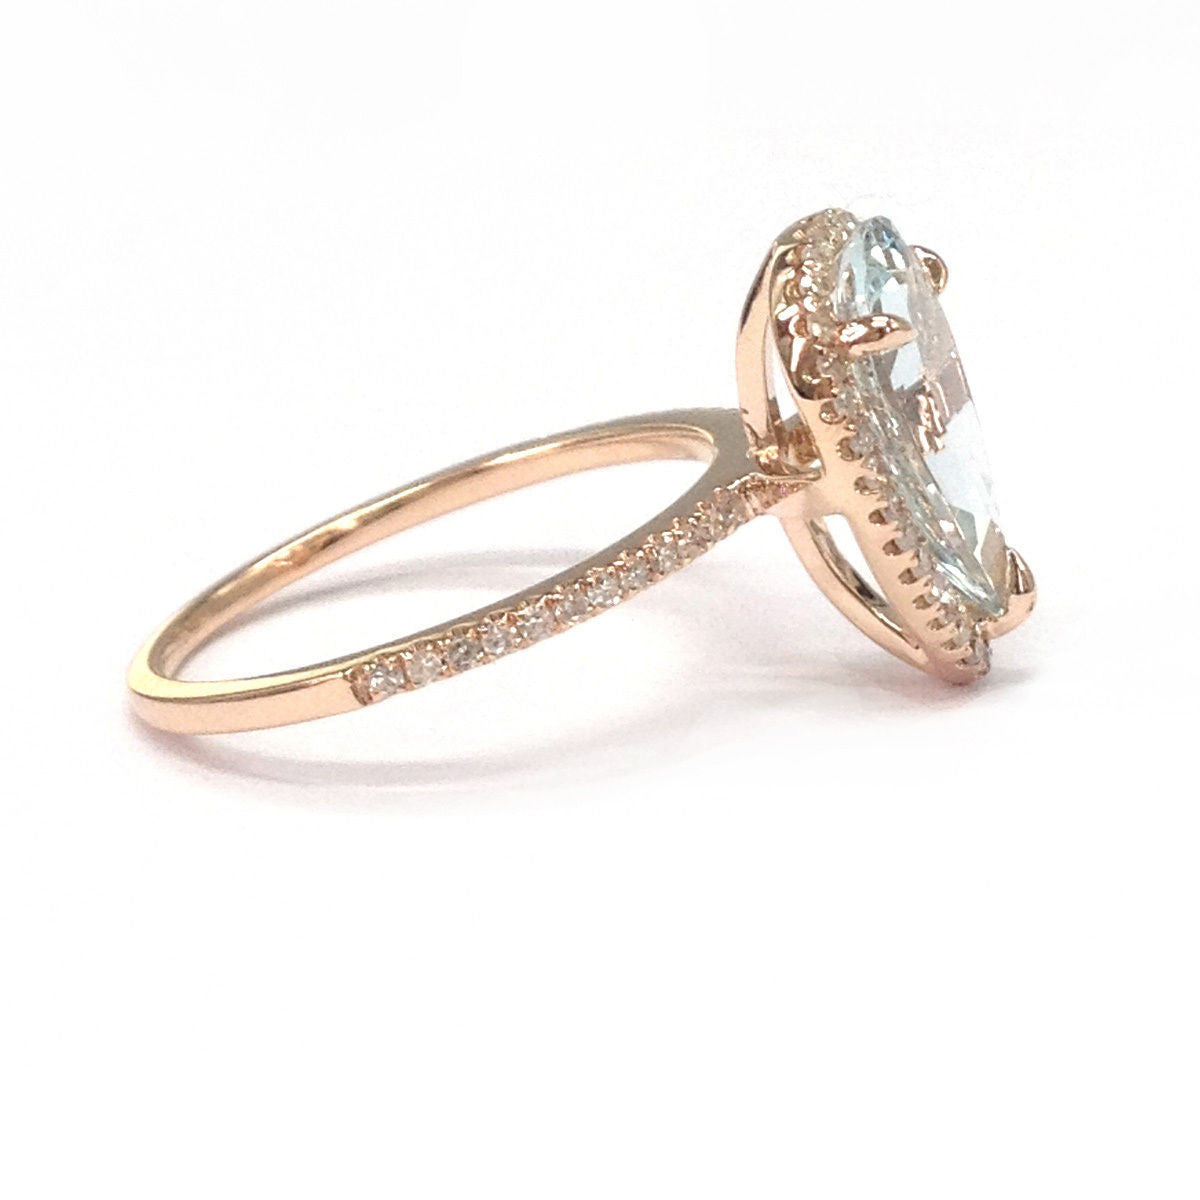 Pear Aquamarine Engagement Ring Pave Diamonds Wedding 14K Rose Gold,10x12mm - Lord of Gem Rings - 3